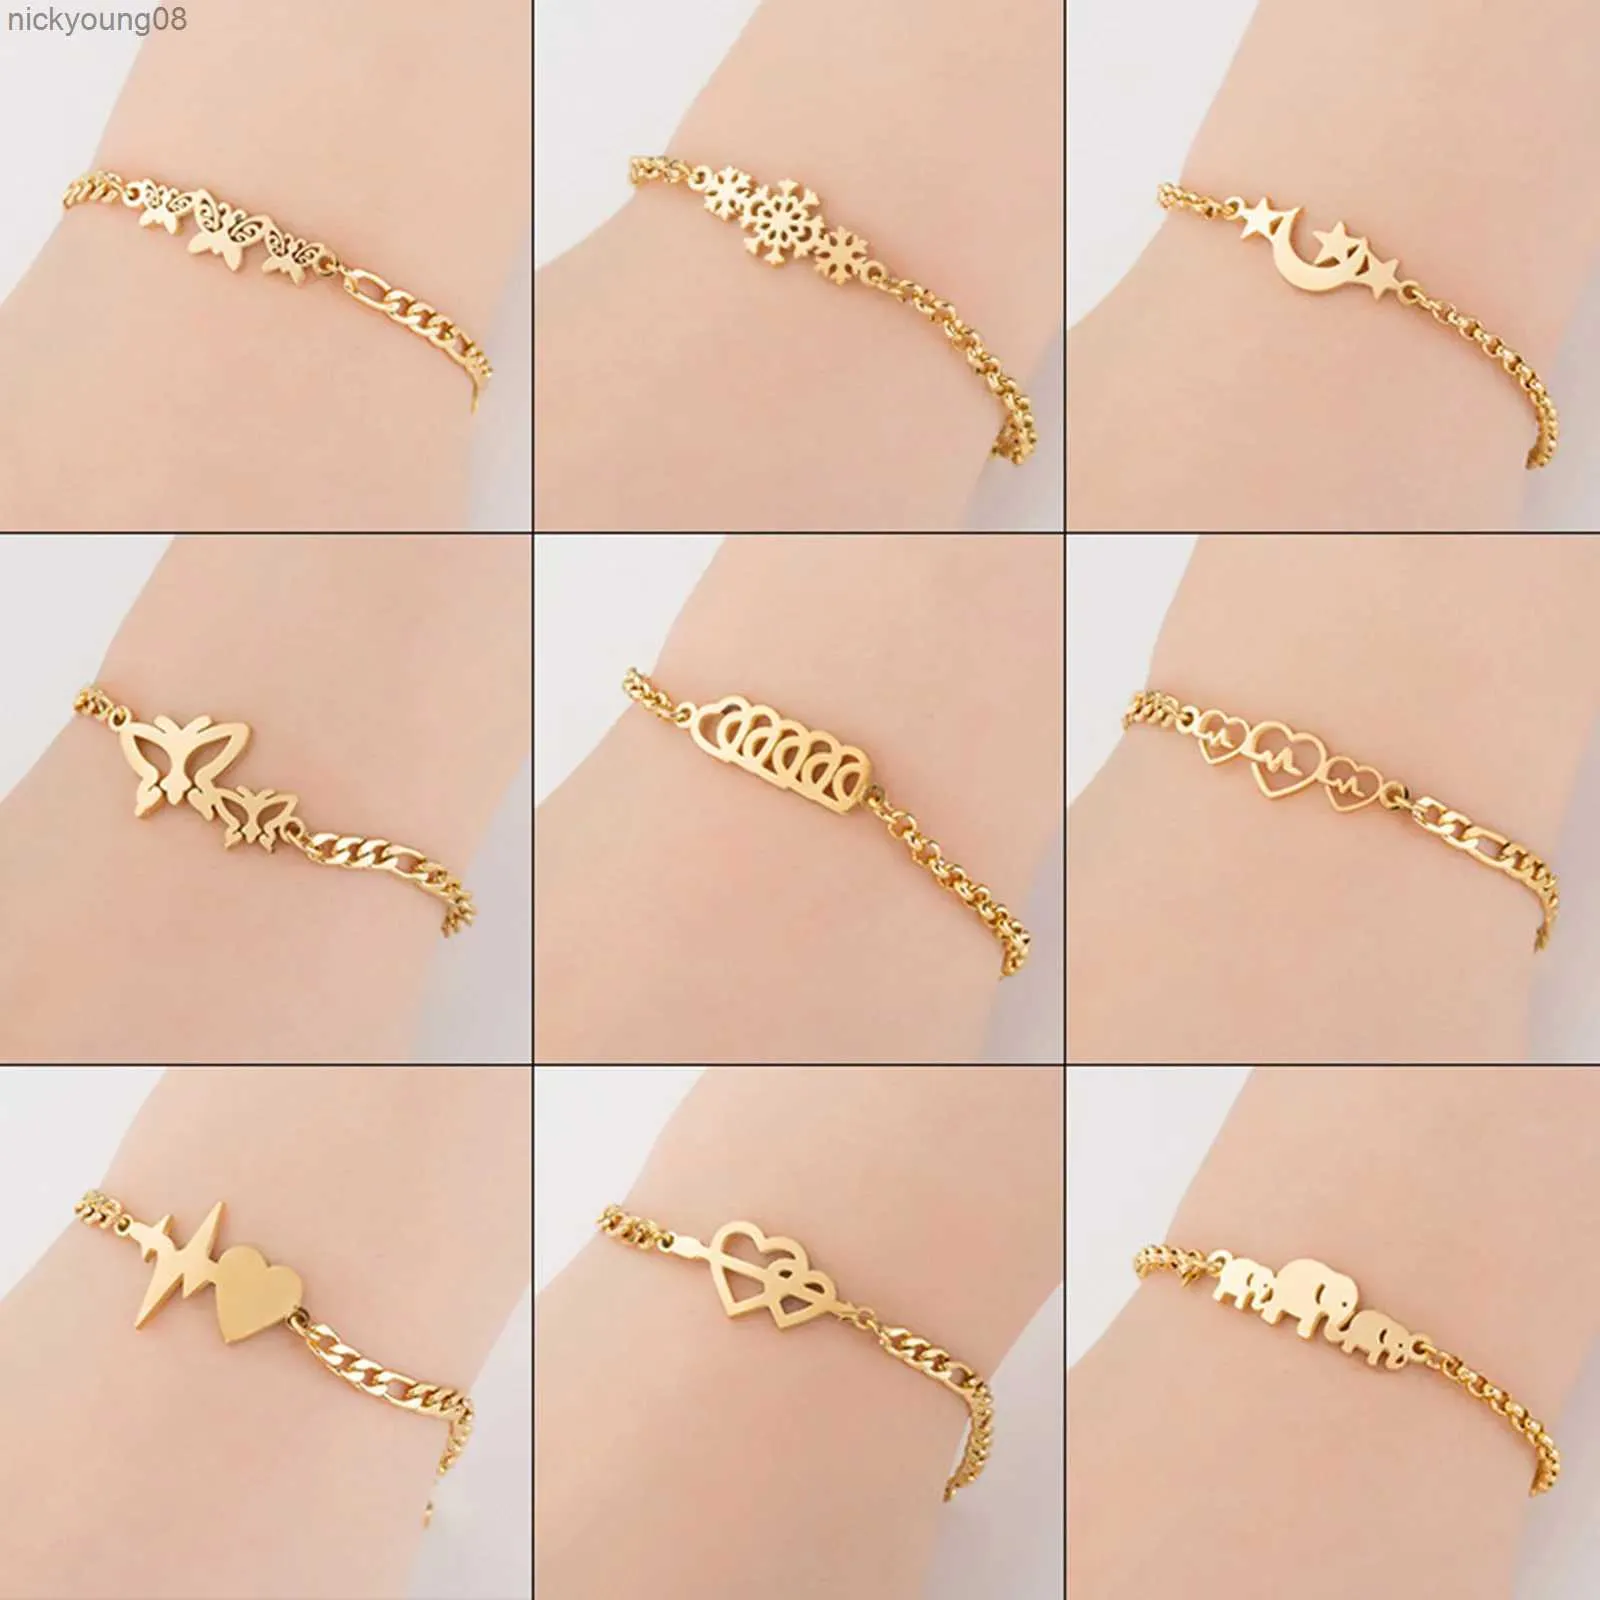 Bangle 1PC 304 Stainless Steel Stylish Bracelets Gold Color Fashion Hollow Butterfly Pendant Chain Bracelet Jewelry for Women 16cm longL2403